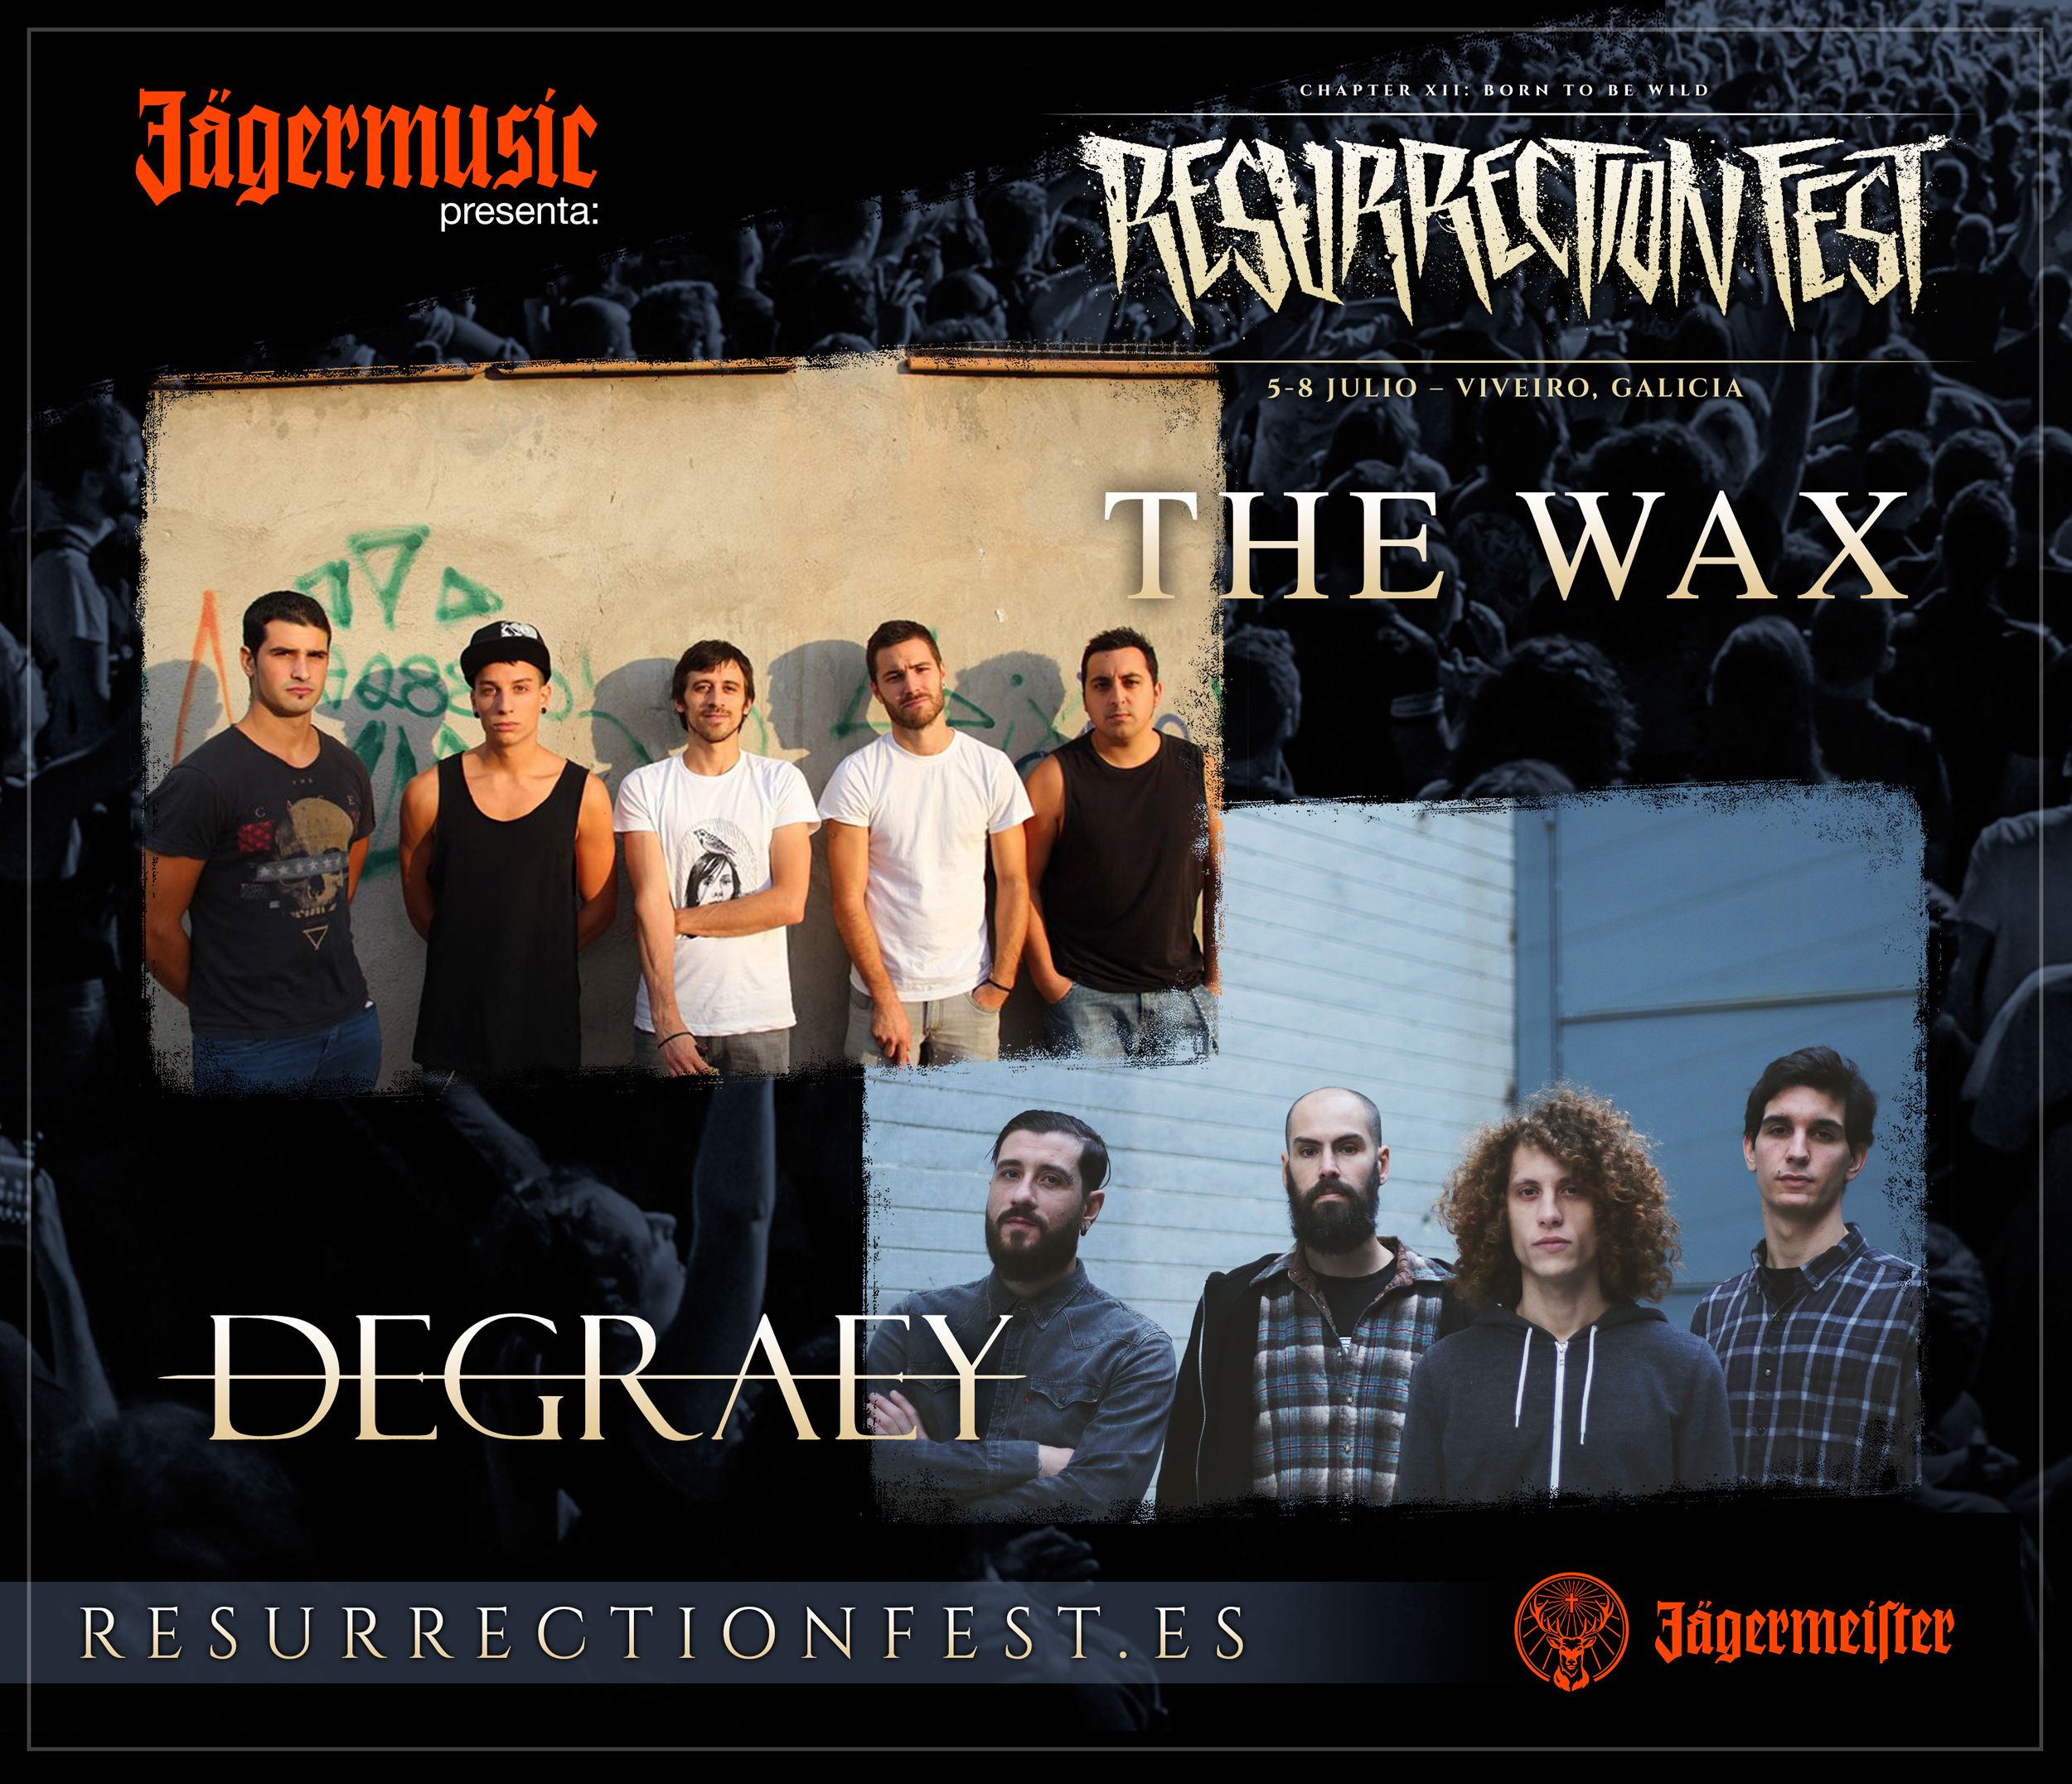 http://www.resurrectionfest.es/media/Resurrection-Fest-2017-Jagermusic-Degraey-The-Wax.jpg